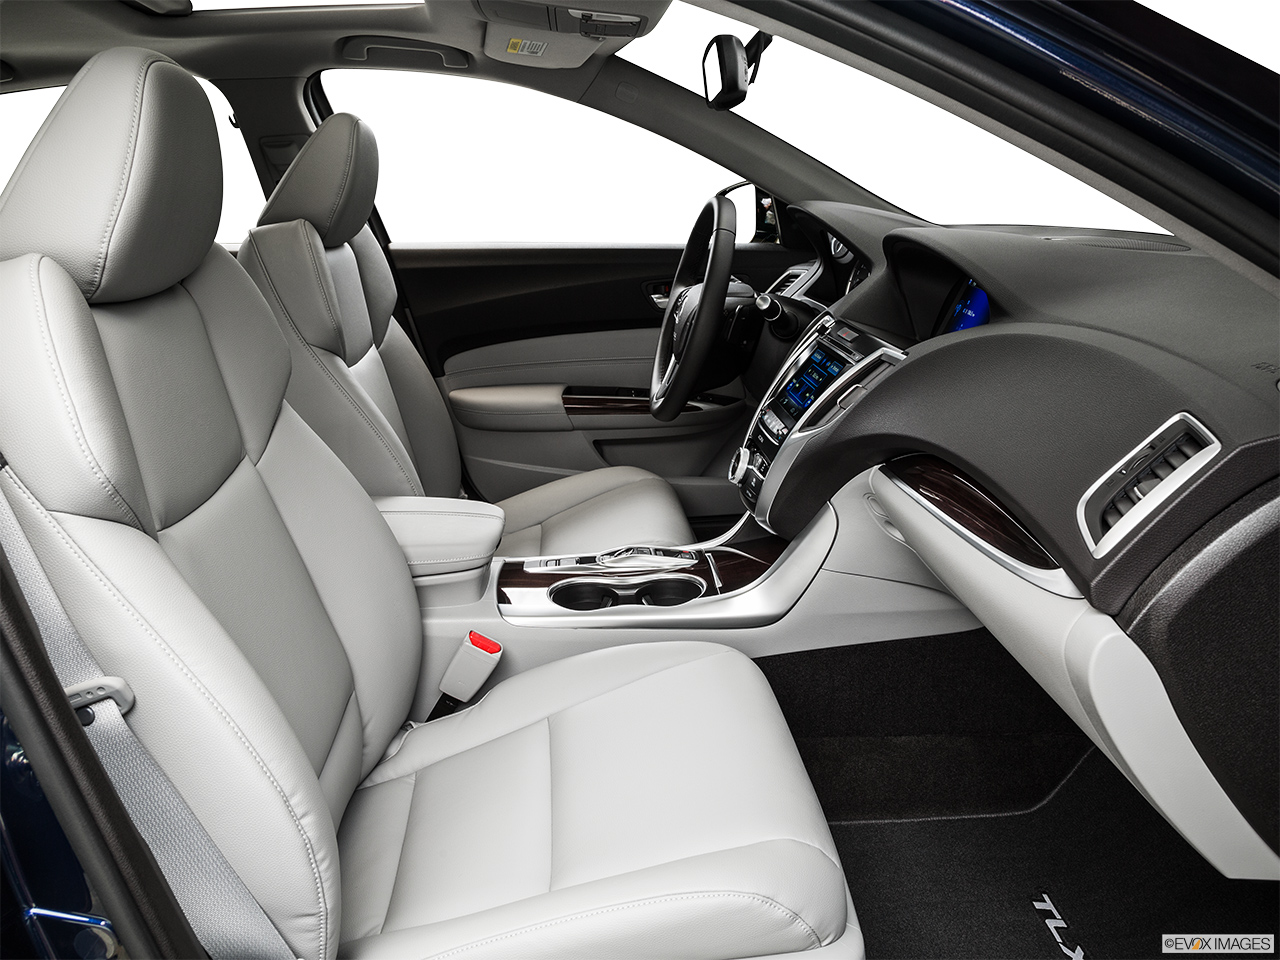 2015 Acura TLX 3.5 V-6 9-AT P-AWS Passenger seat. 